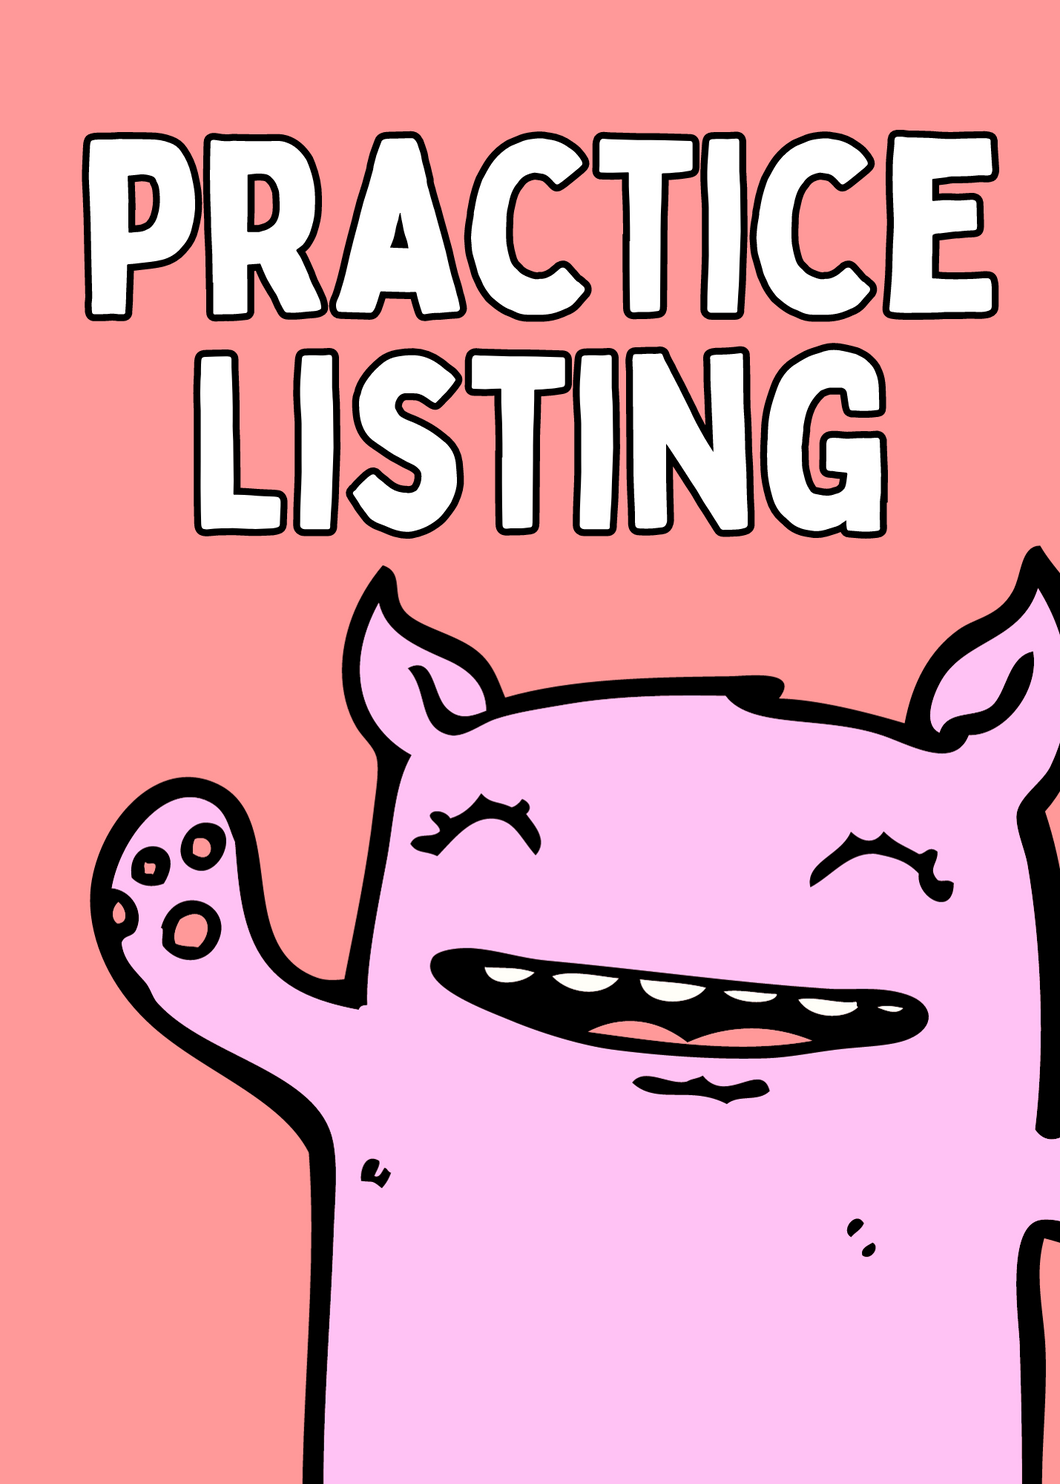 Practice listing